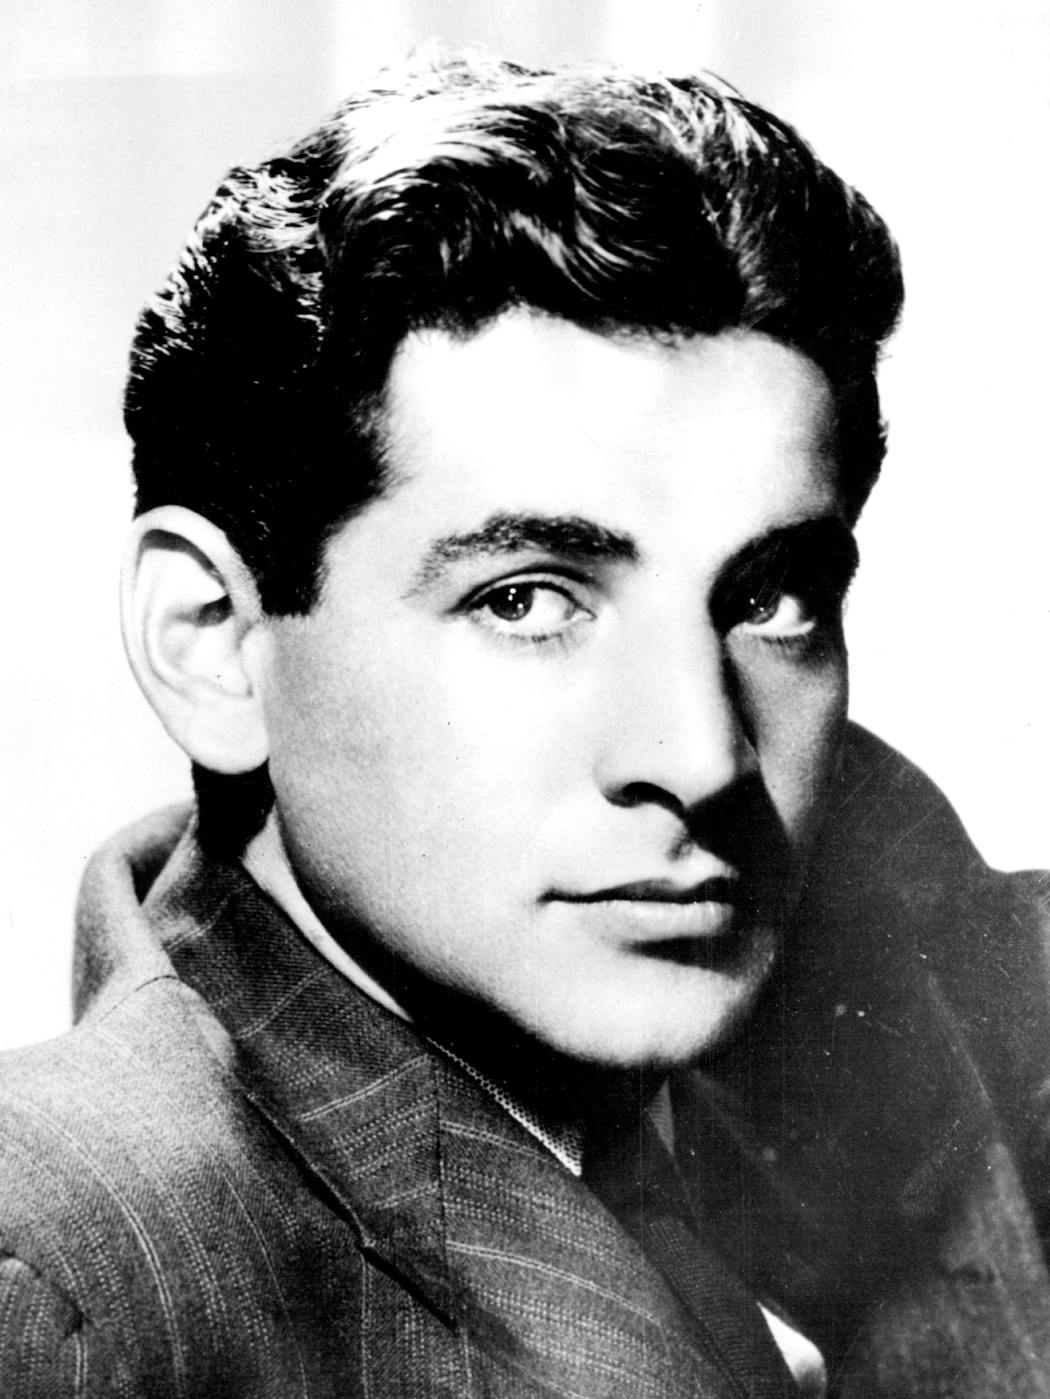 Leonard Bernstein in the early 1940s.